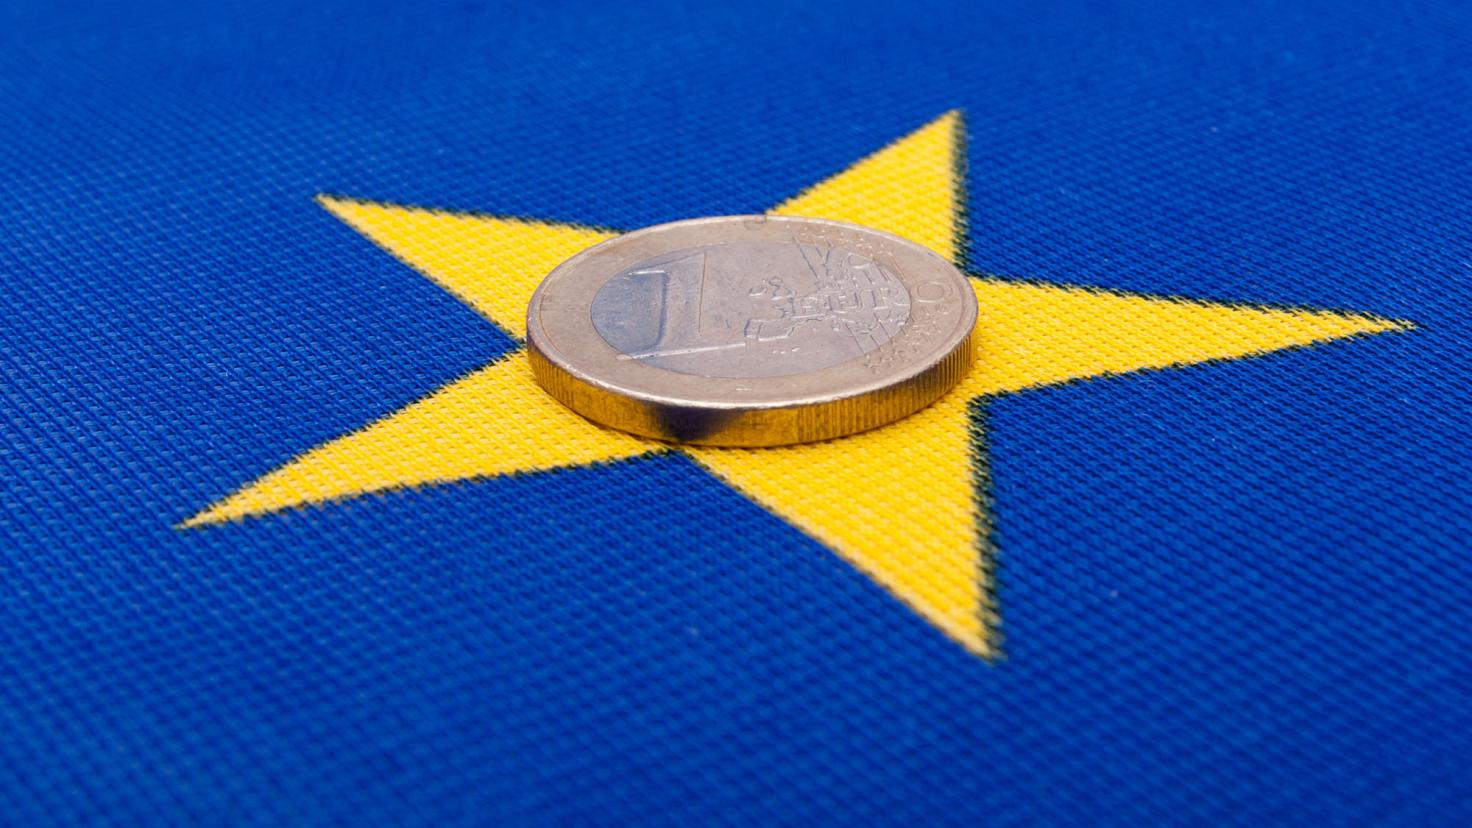 En euromønt sidder på en gul stjerne fra det europæiske flag.